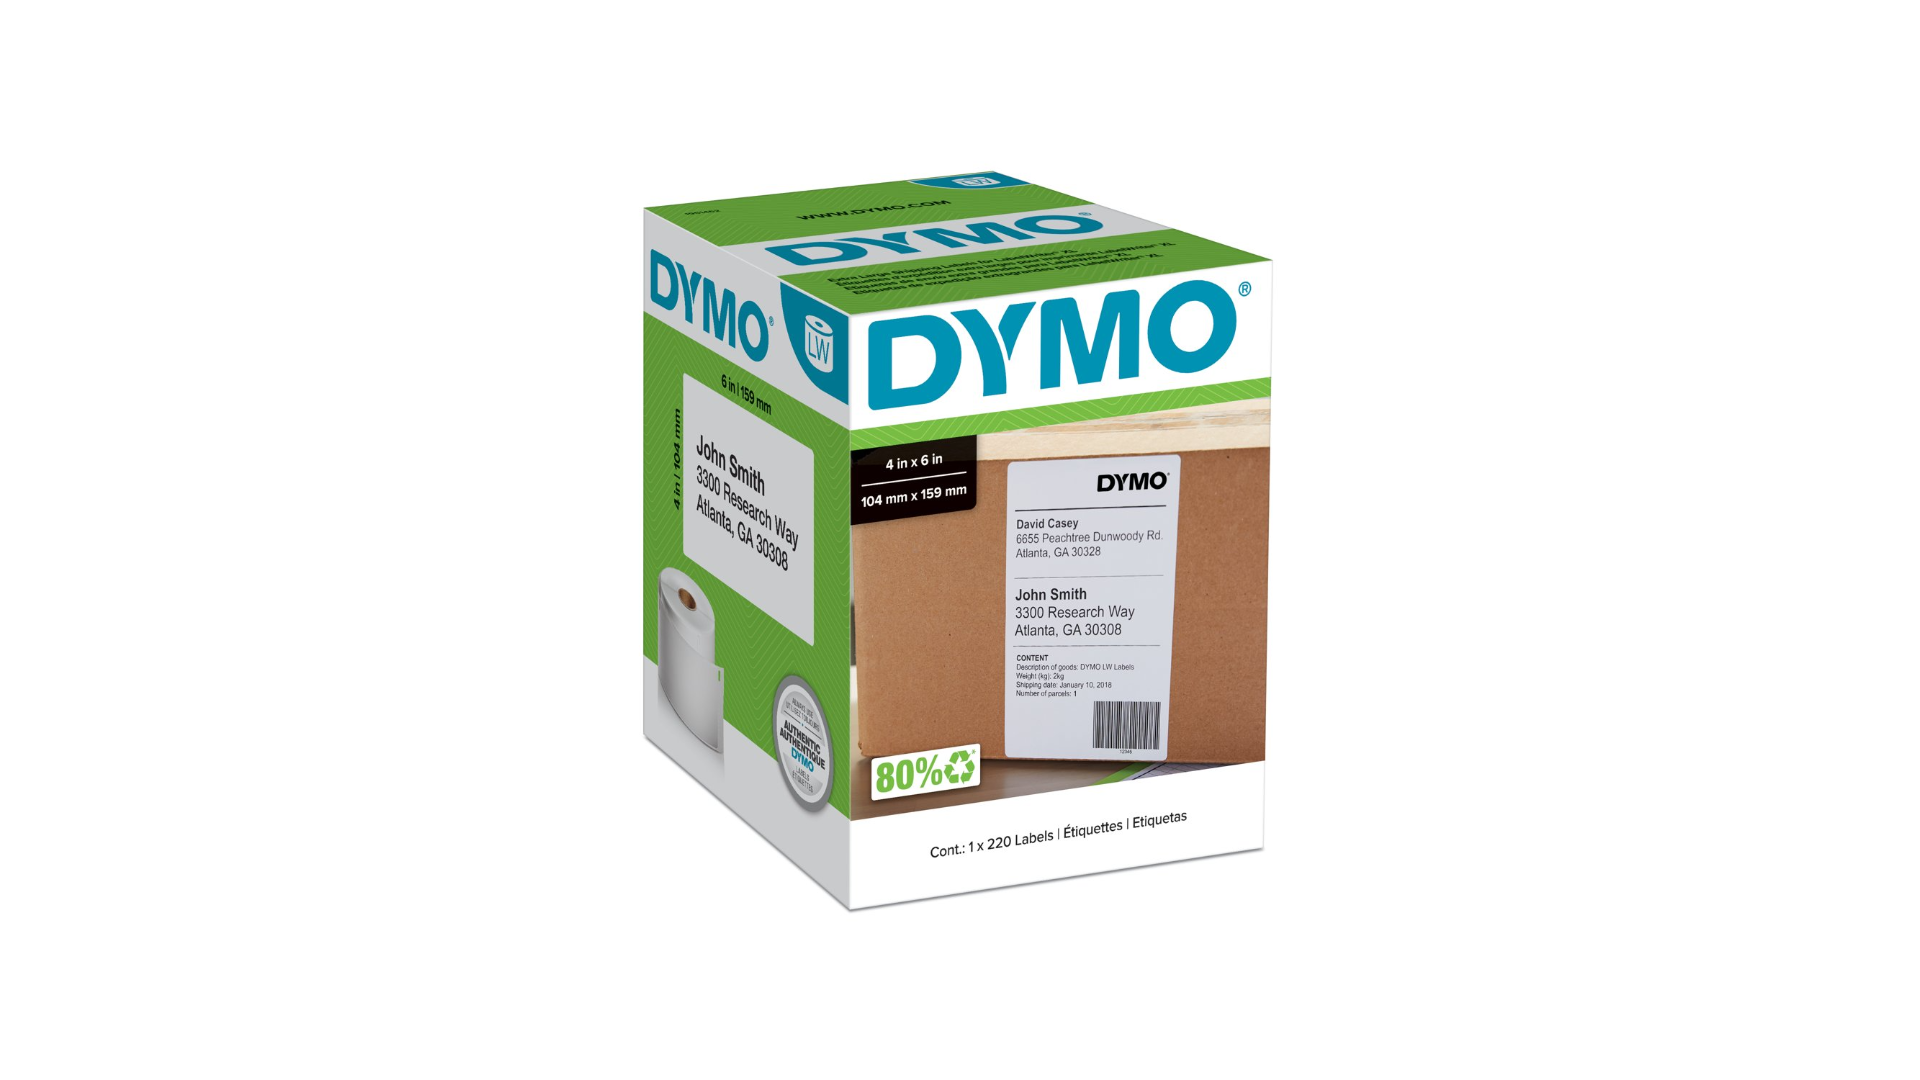 TechWarehouse 2128307 Dymo LW 104mm x 159mm XL Shipping Label Dymo